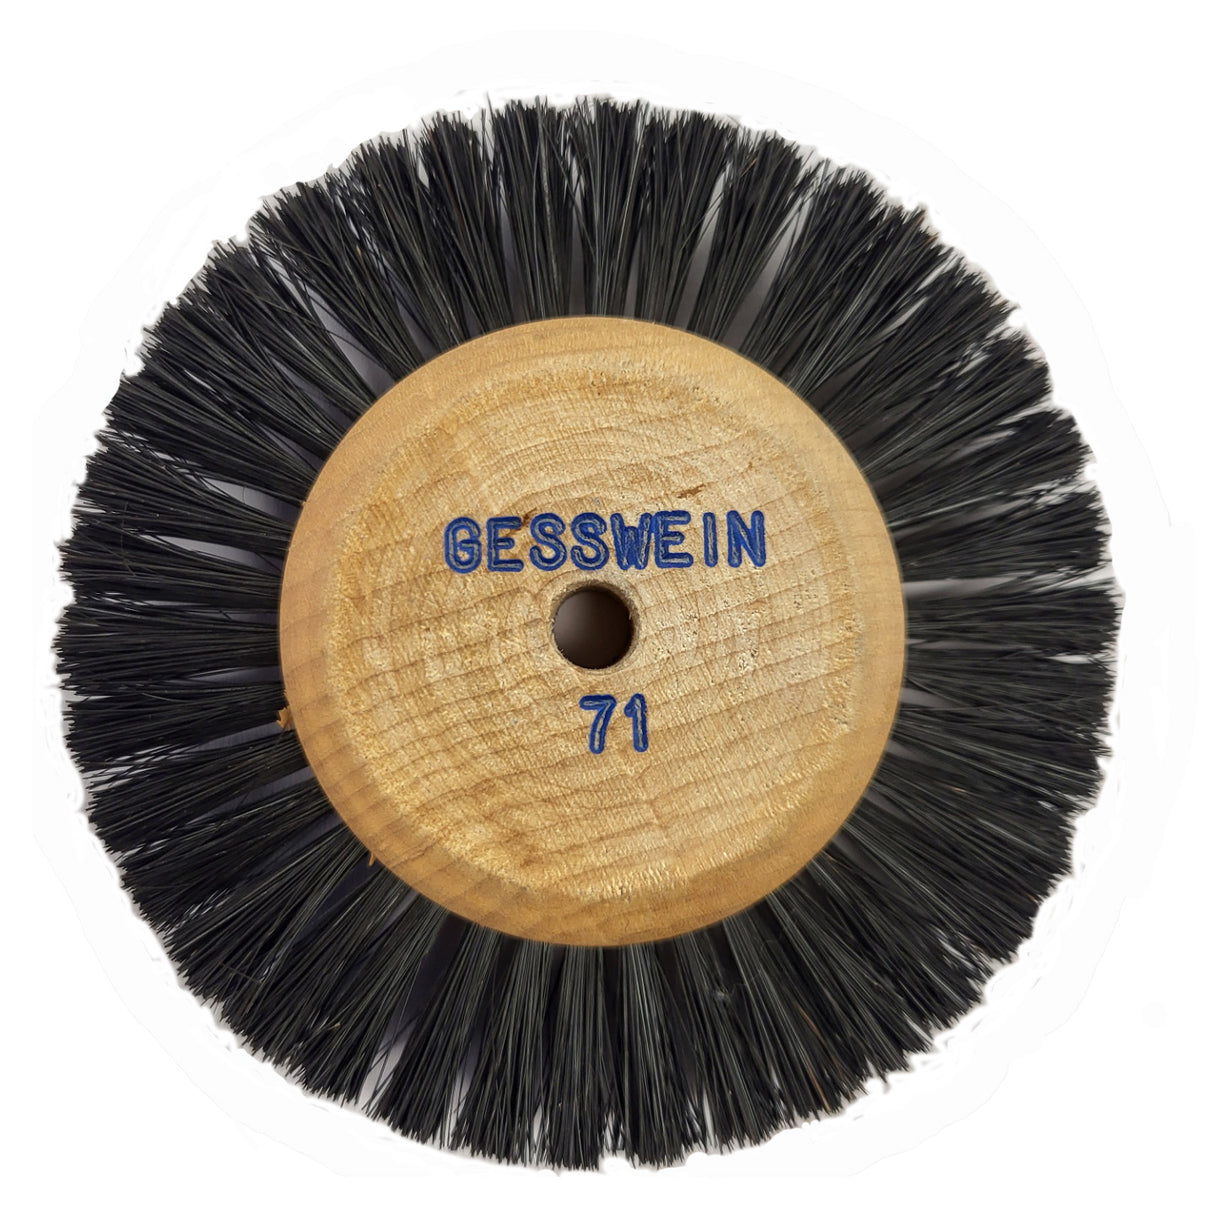 Gesswein #1 Superior Wood Hub Wheel Brush - #71